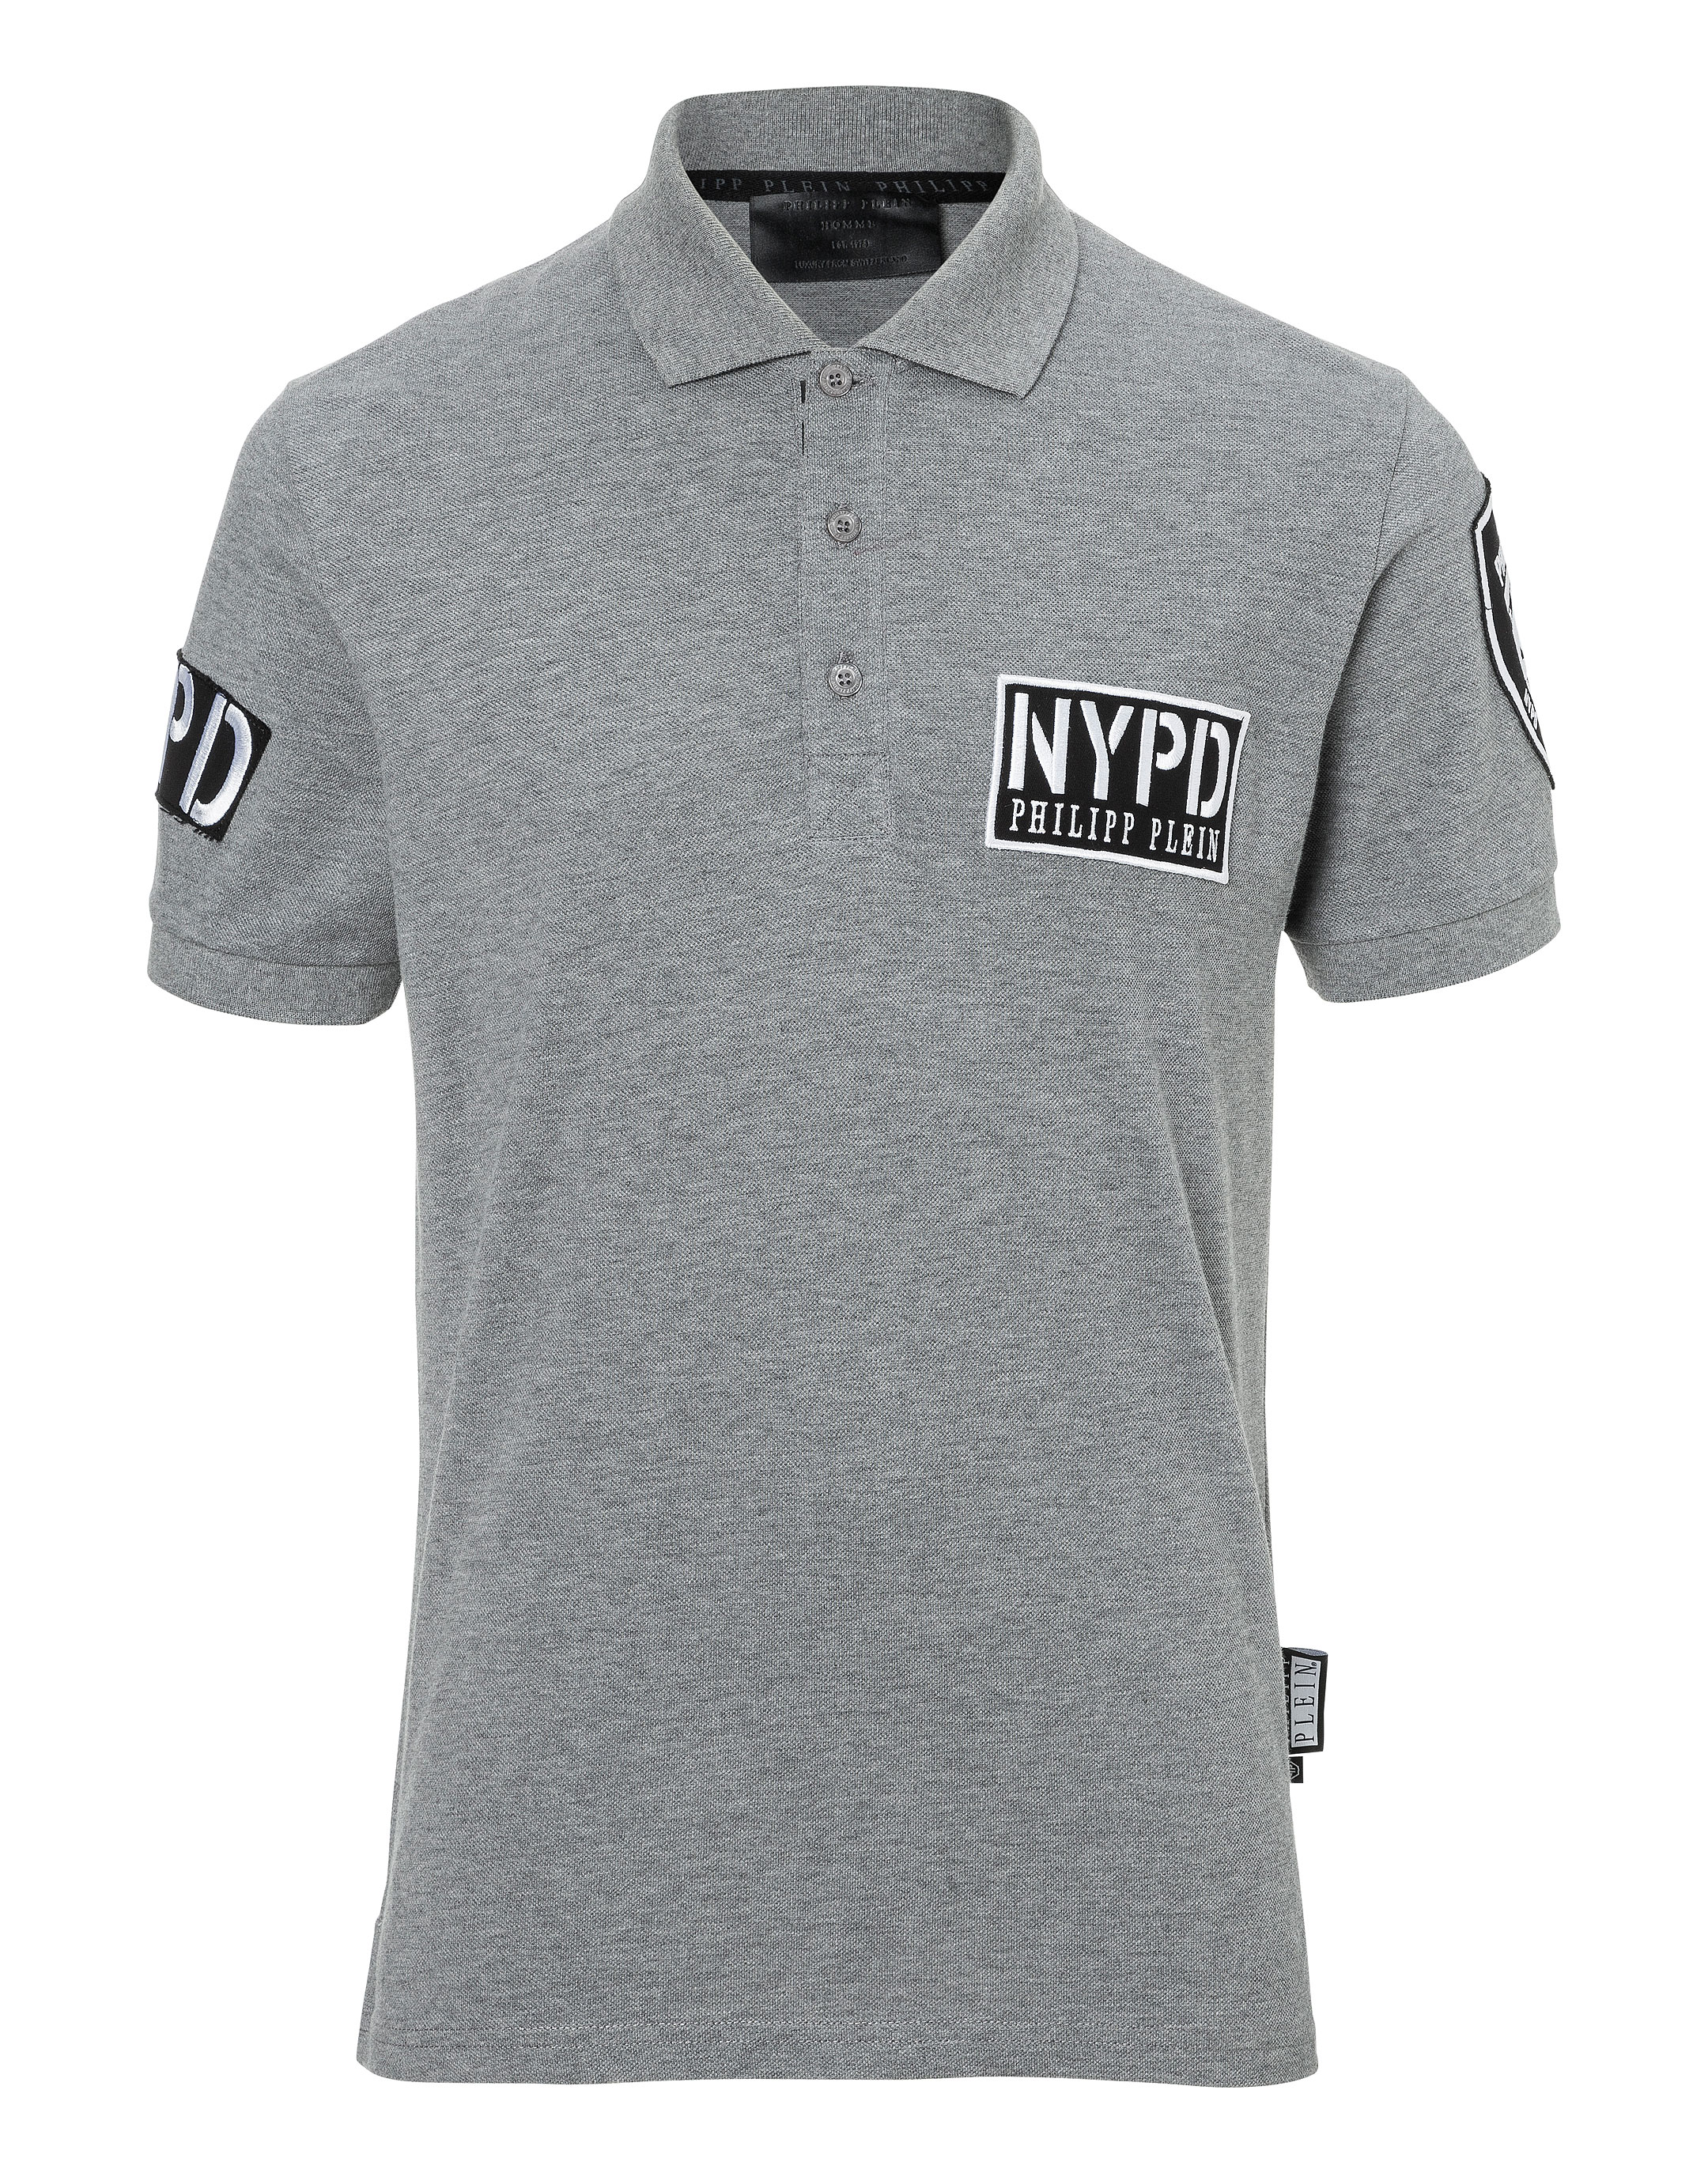 Polo shirt SS "NYPD" | Philipp Plein Outlet